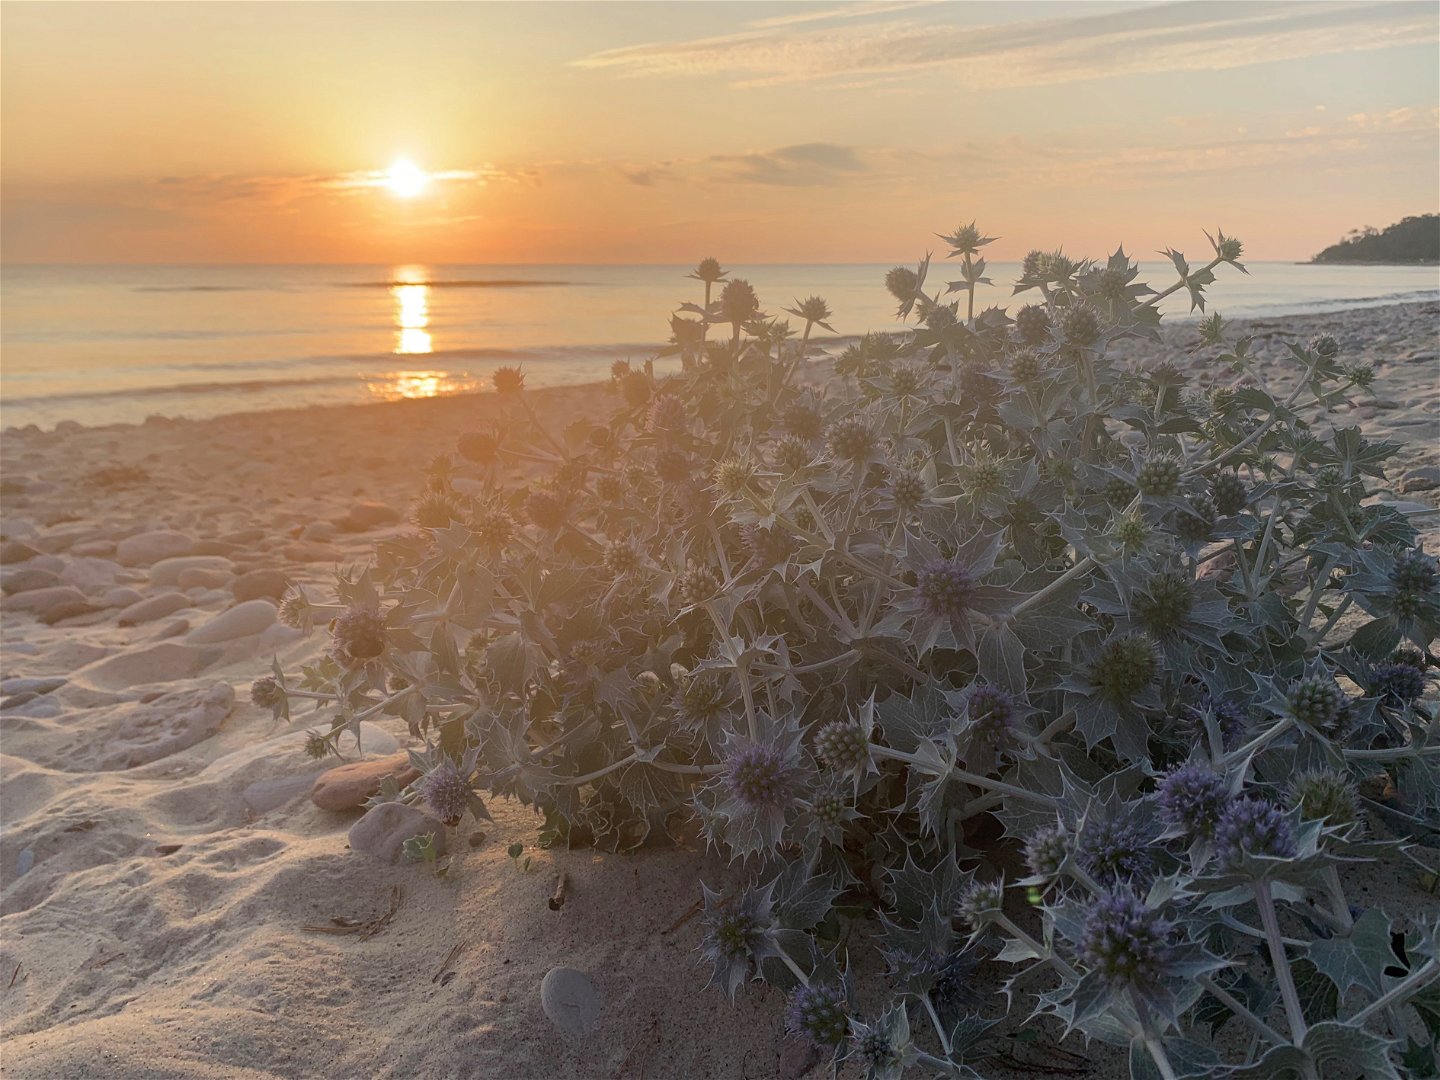 Blommande martorn på sandstrand med solnedgång i bakgrunden